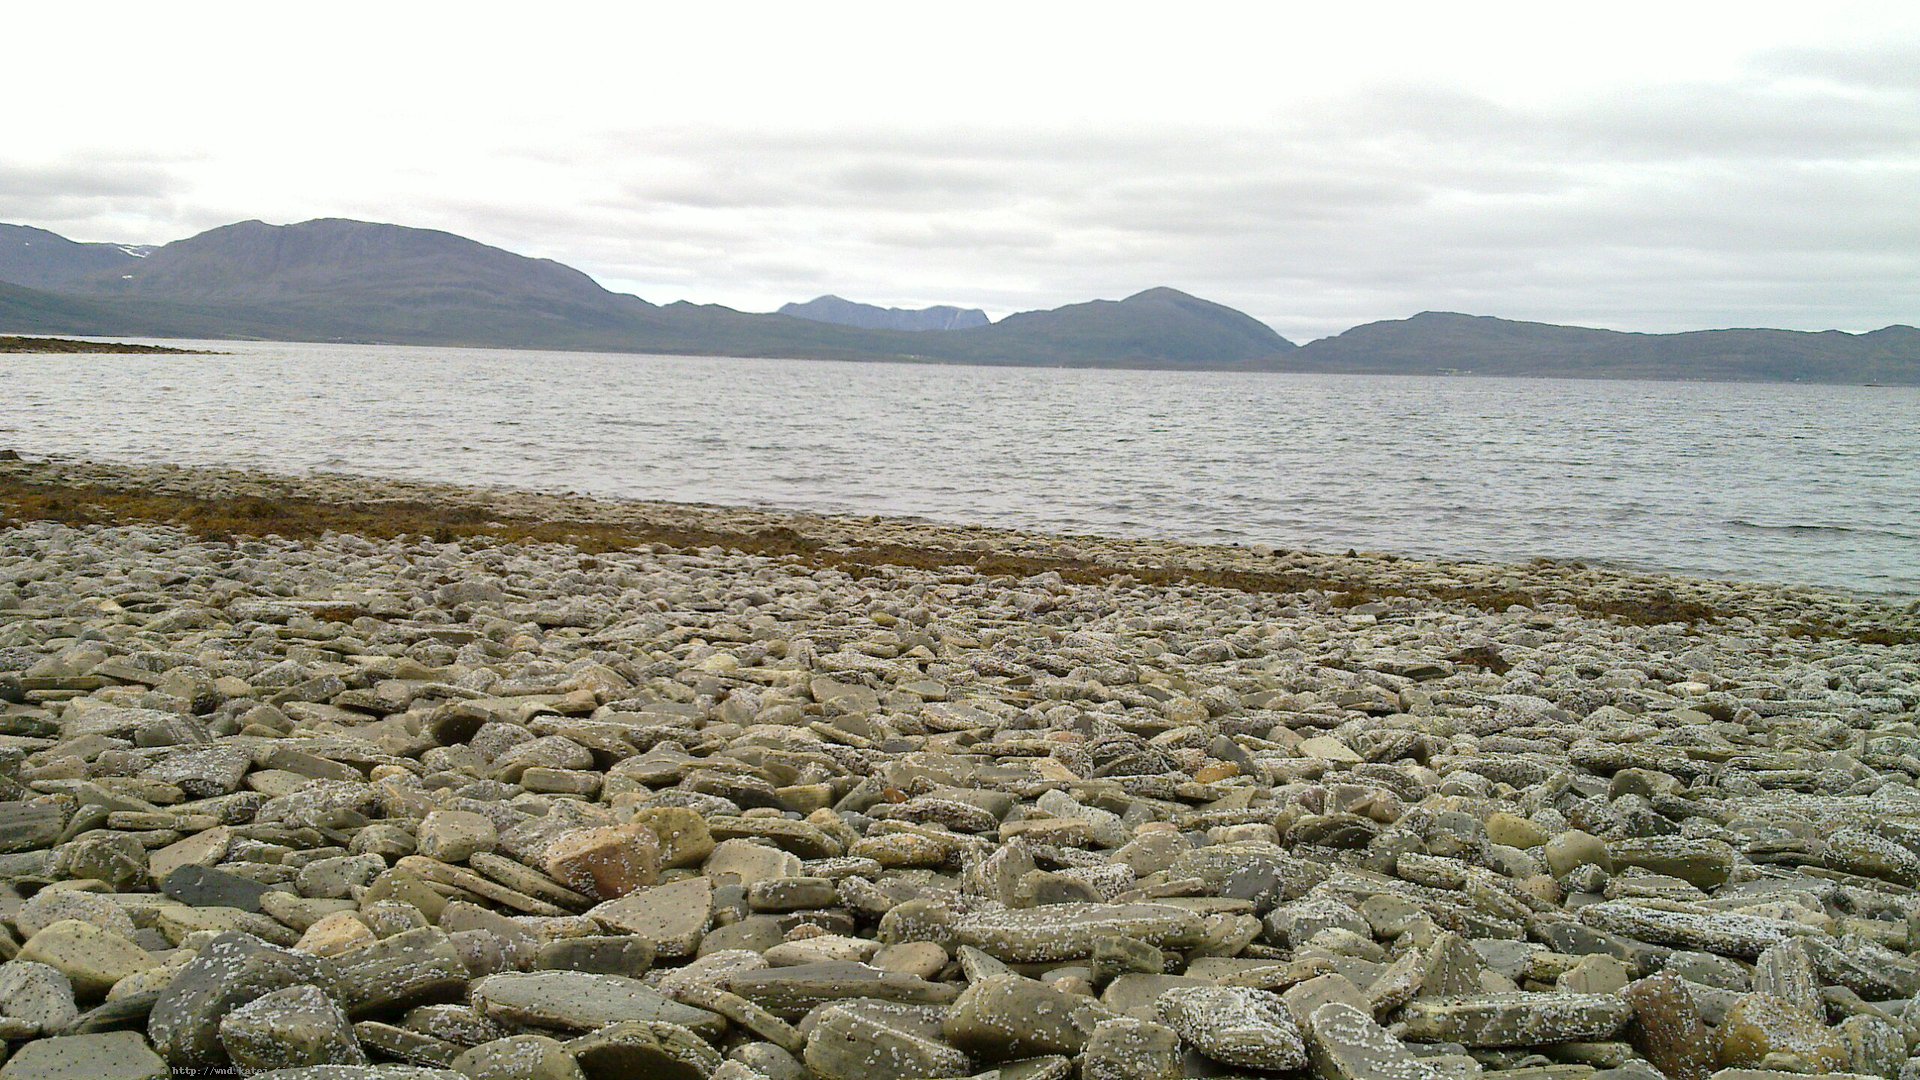 Obligatory rocky shore south of Hammerfest